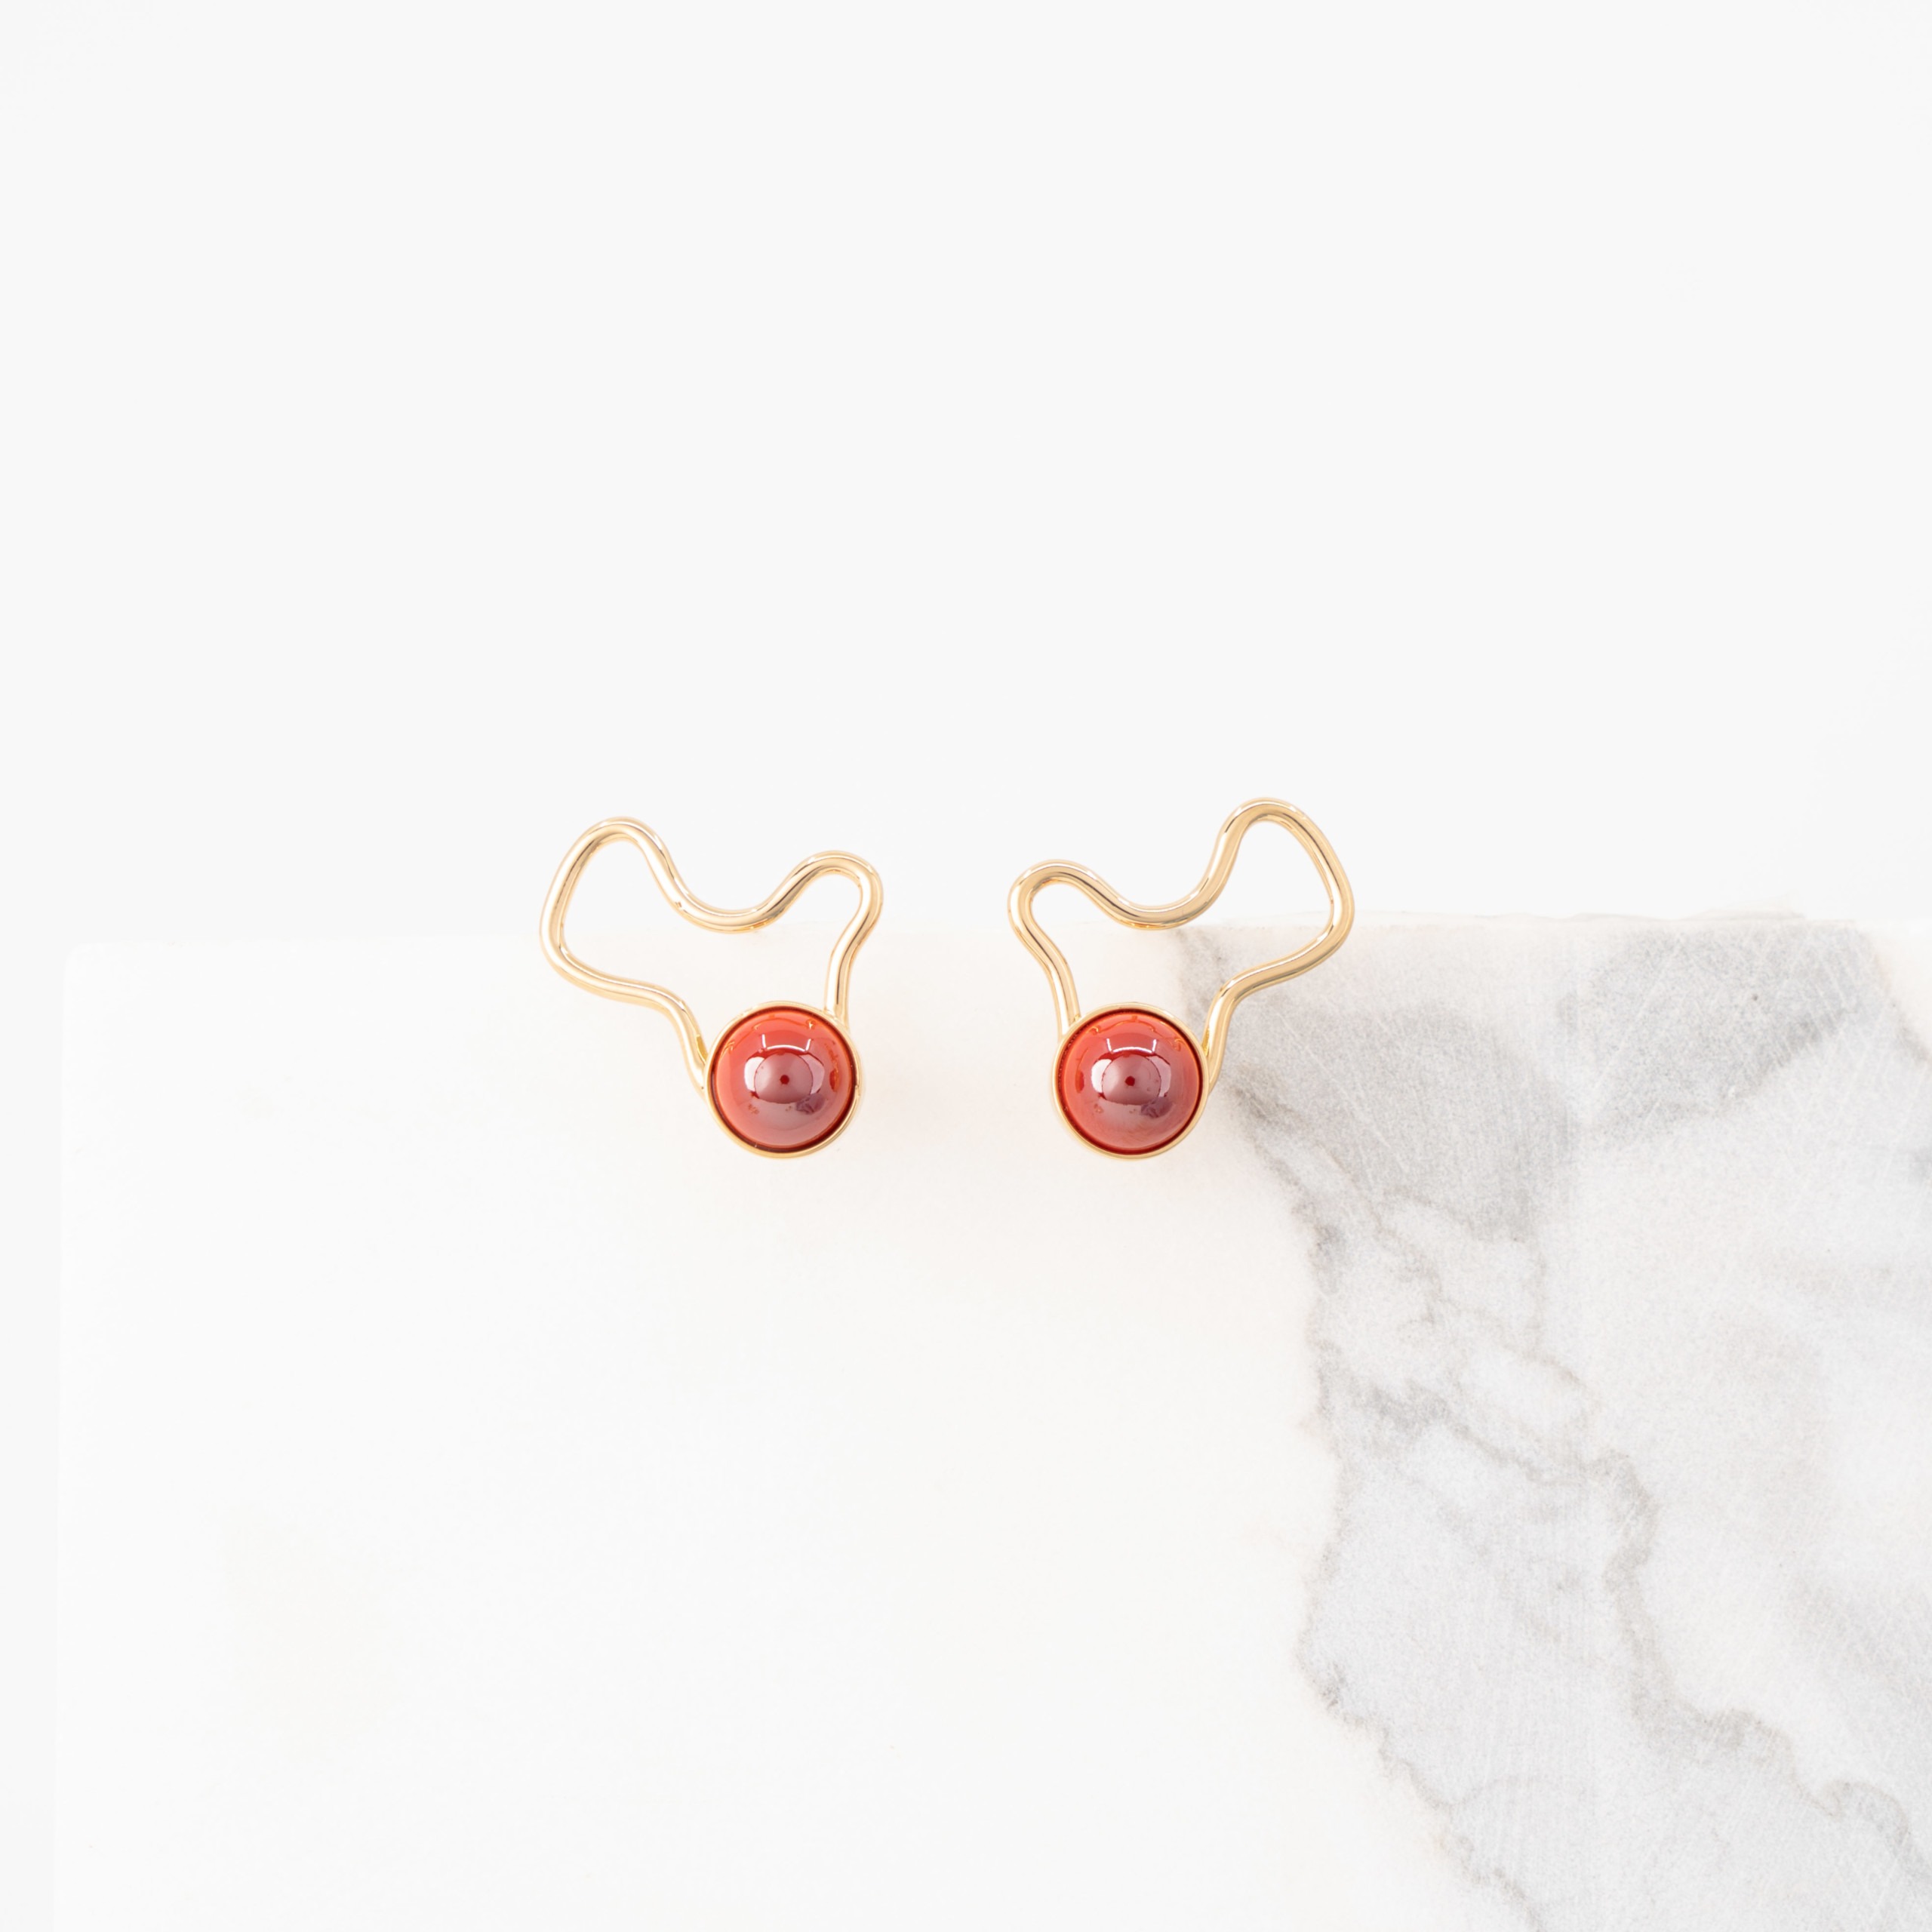 Lucciana gold shortie intense red earrings